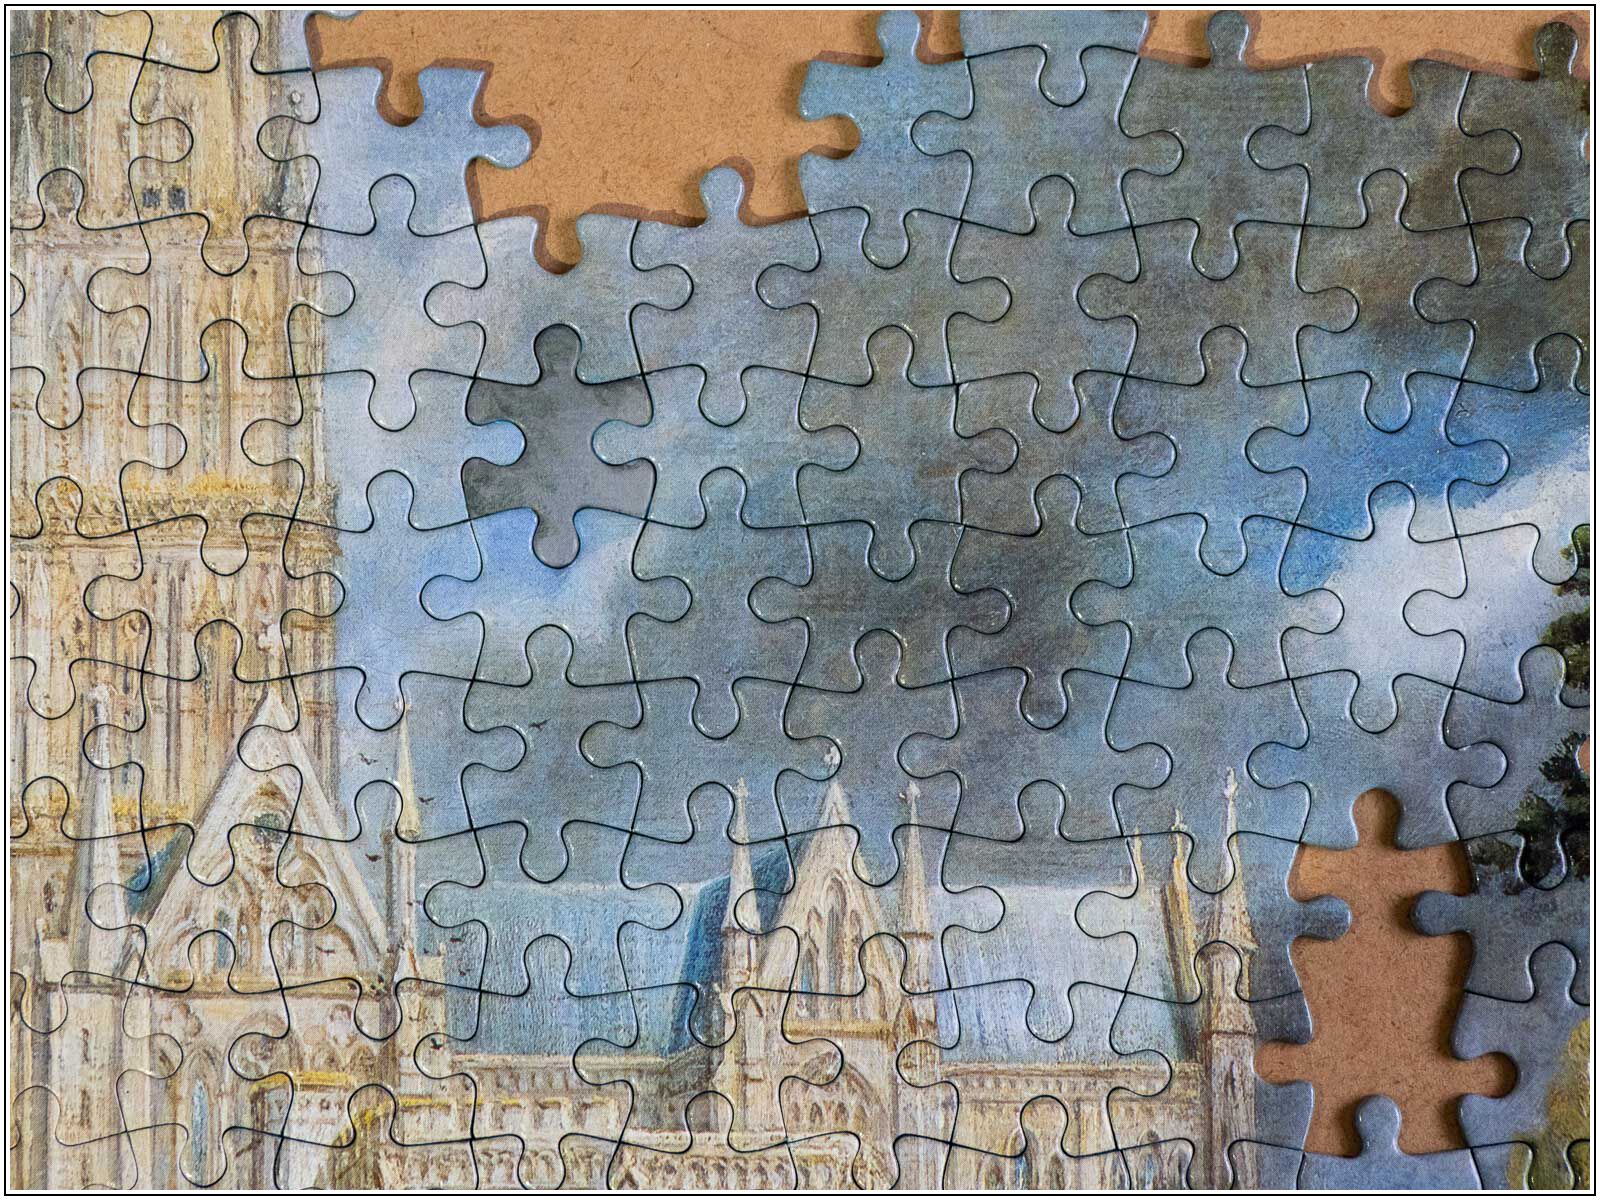 Puzzled, John Saunders